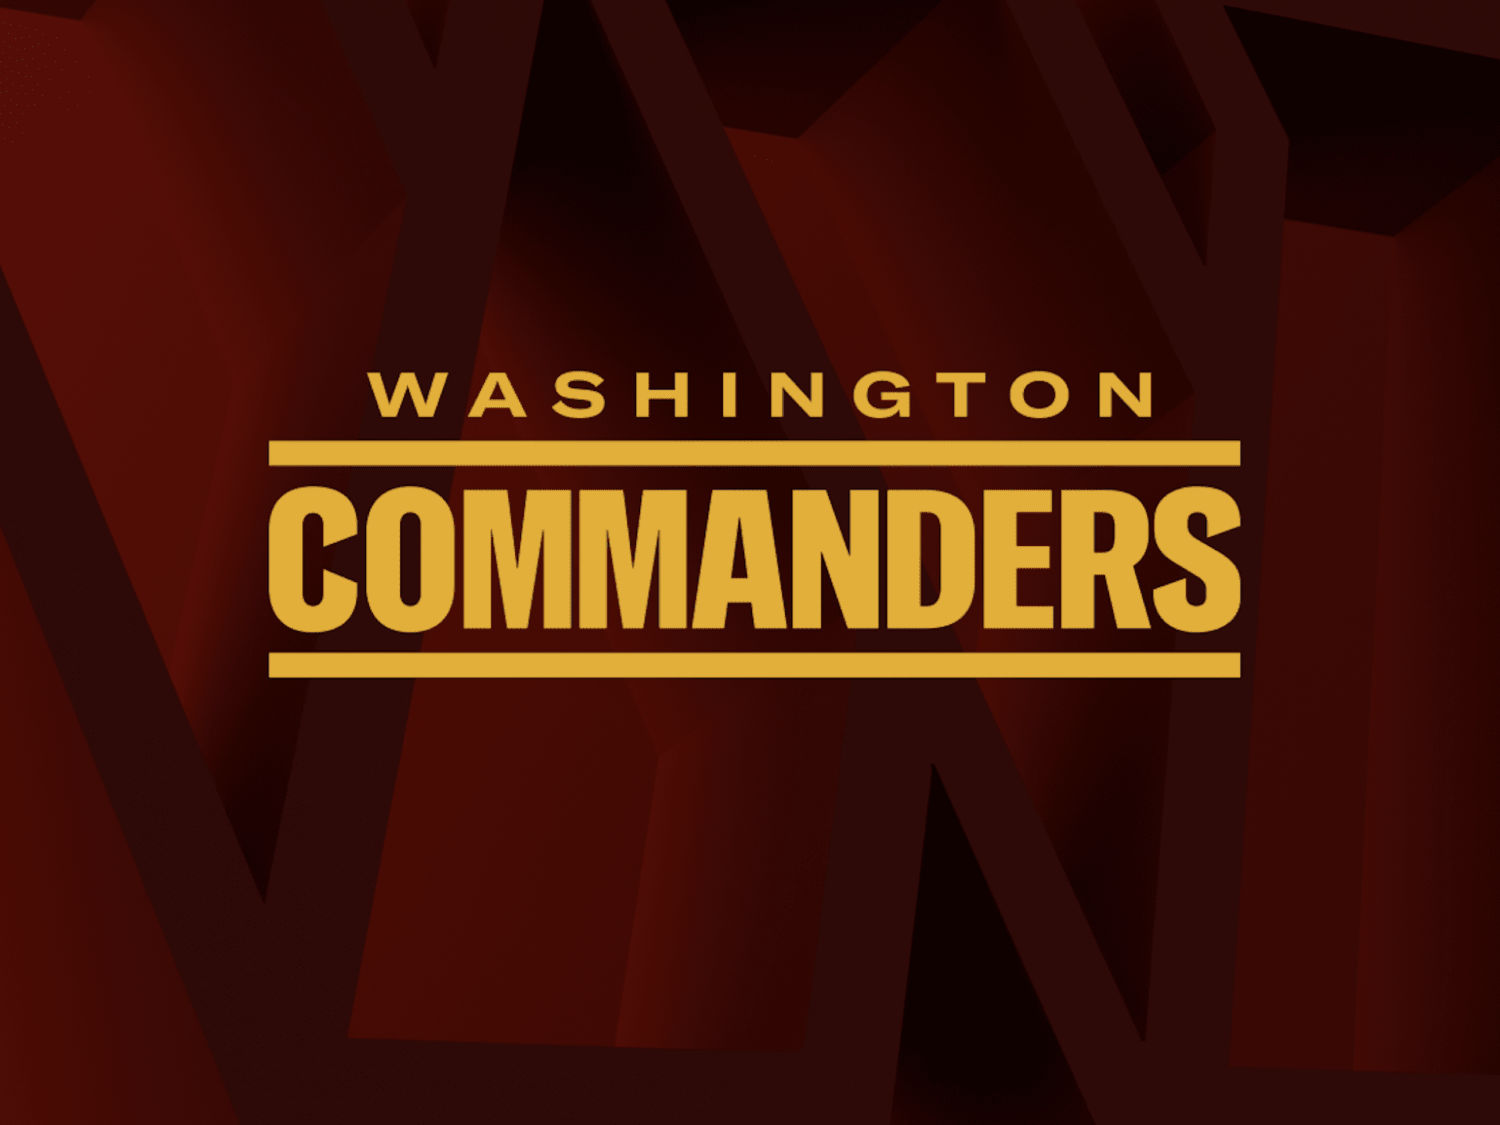 Washington Redskins rebrand to Washington Commanders with new visual